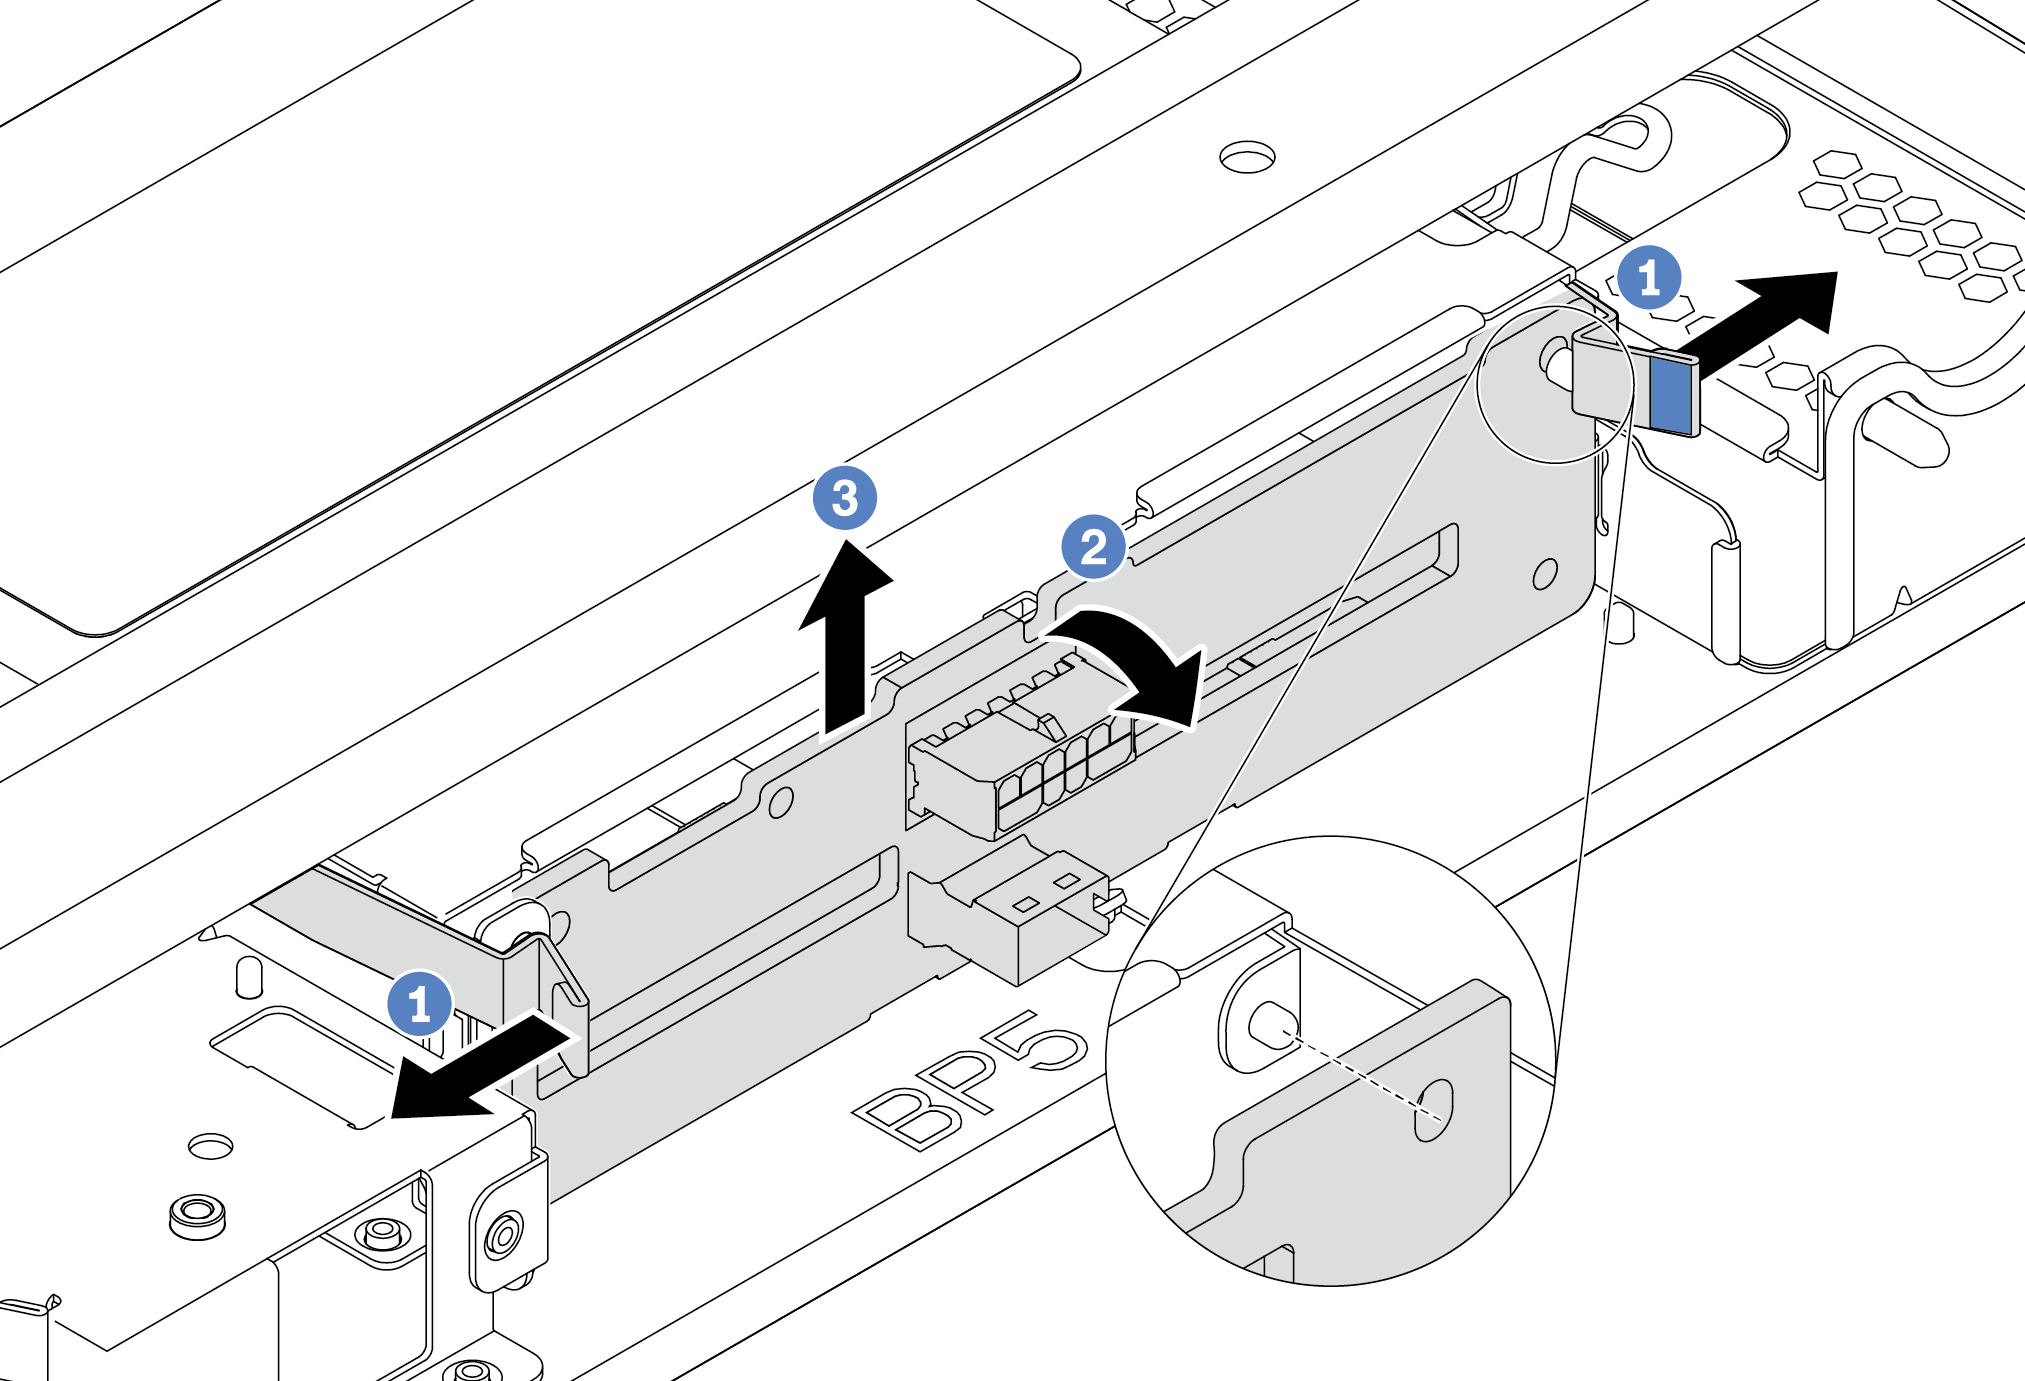 Remove the 4 x 2.5-inch-drive backplane